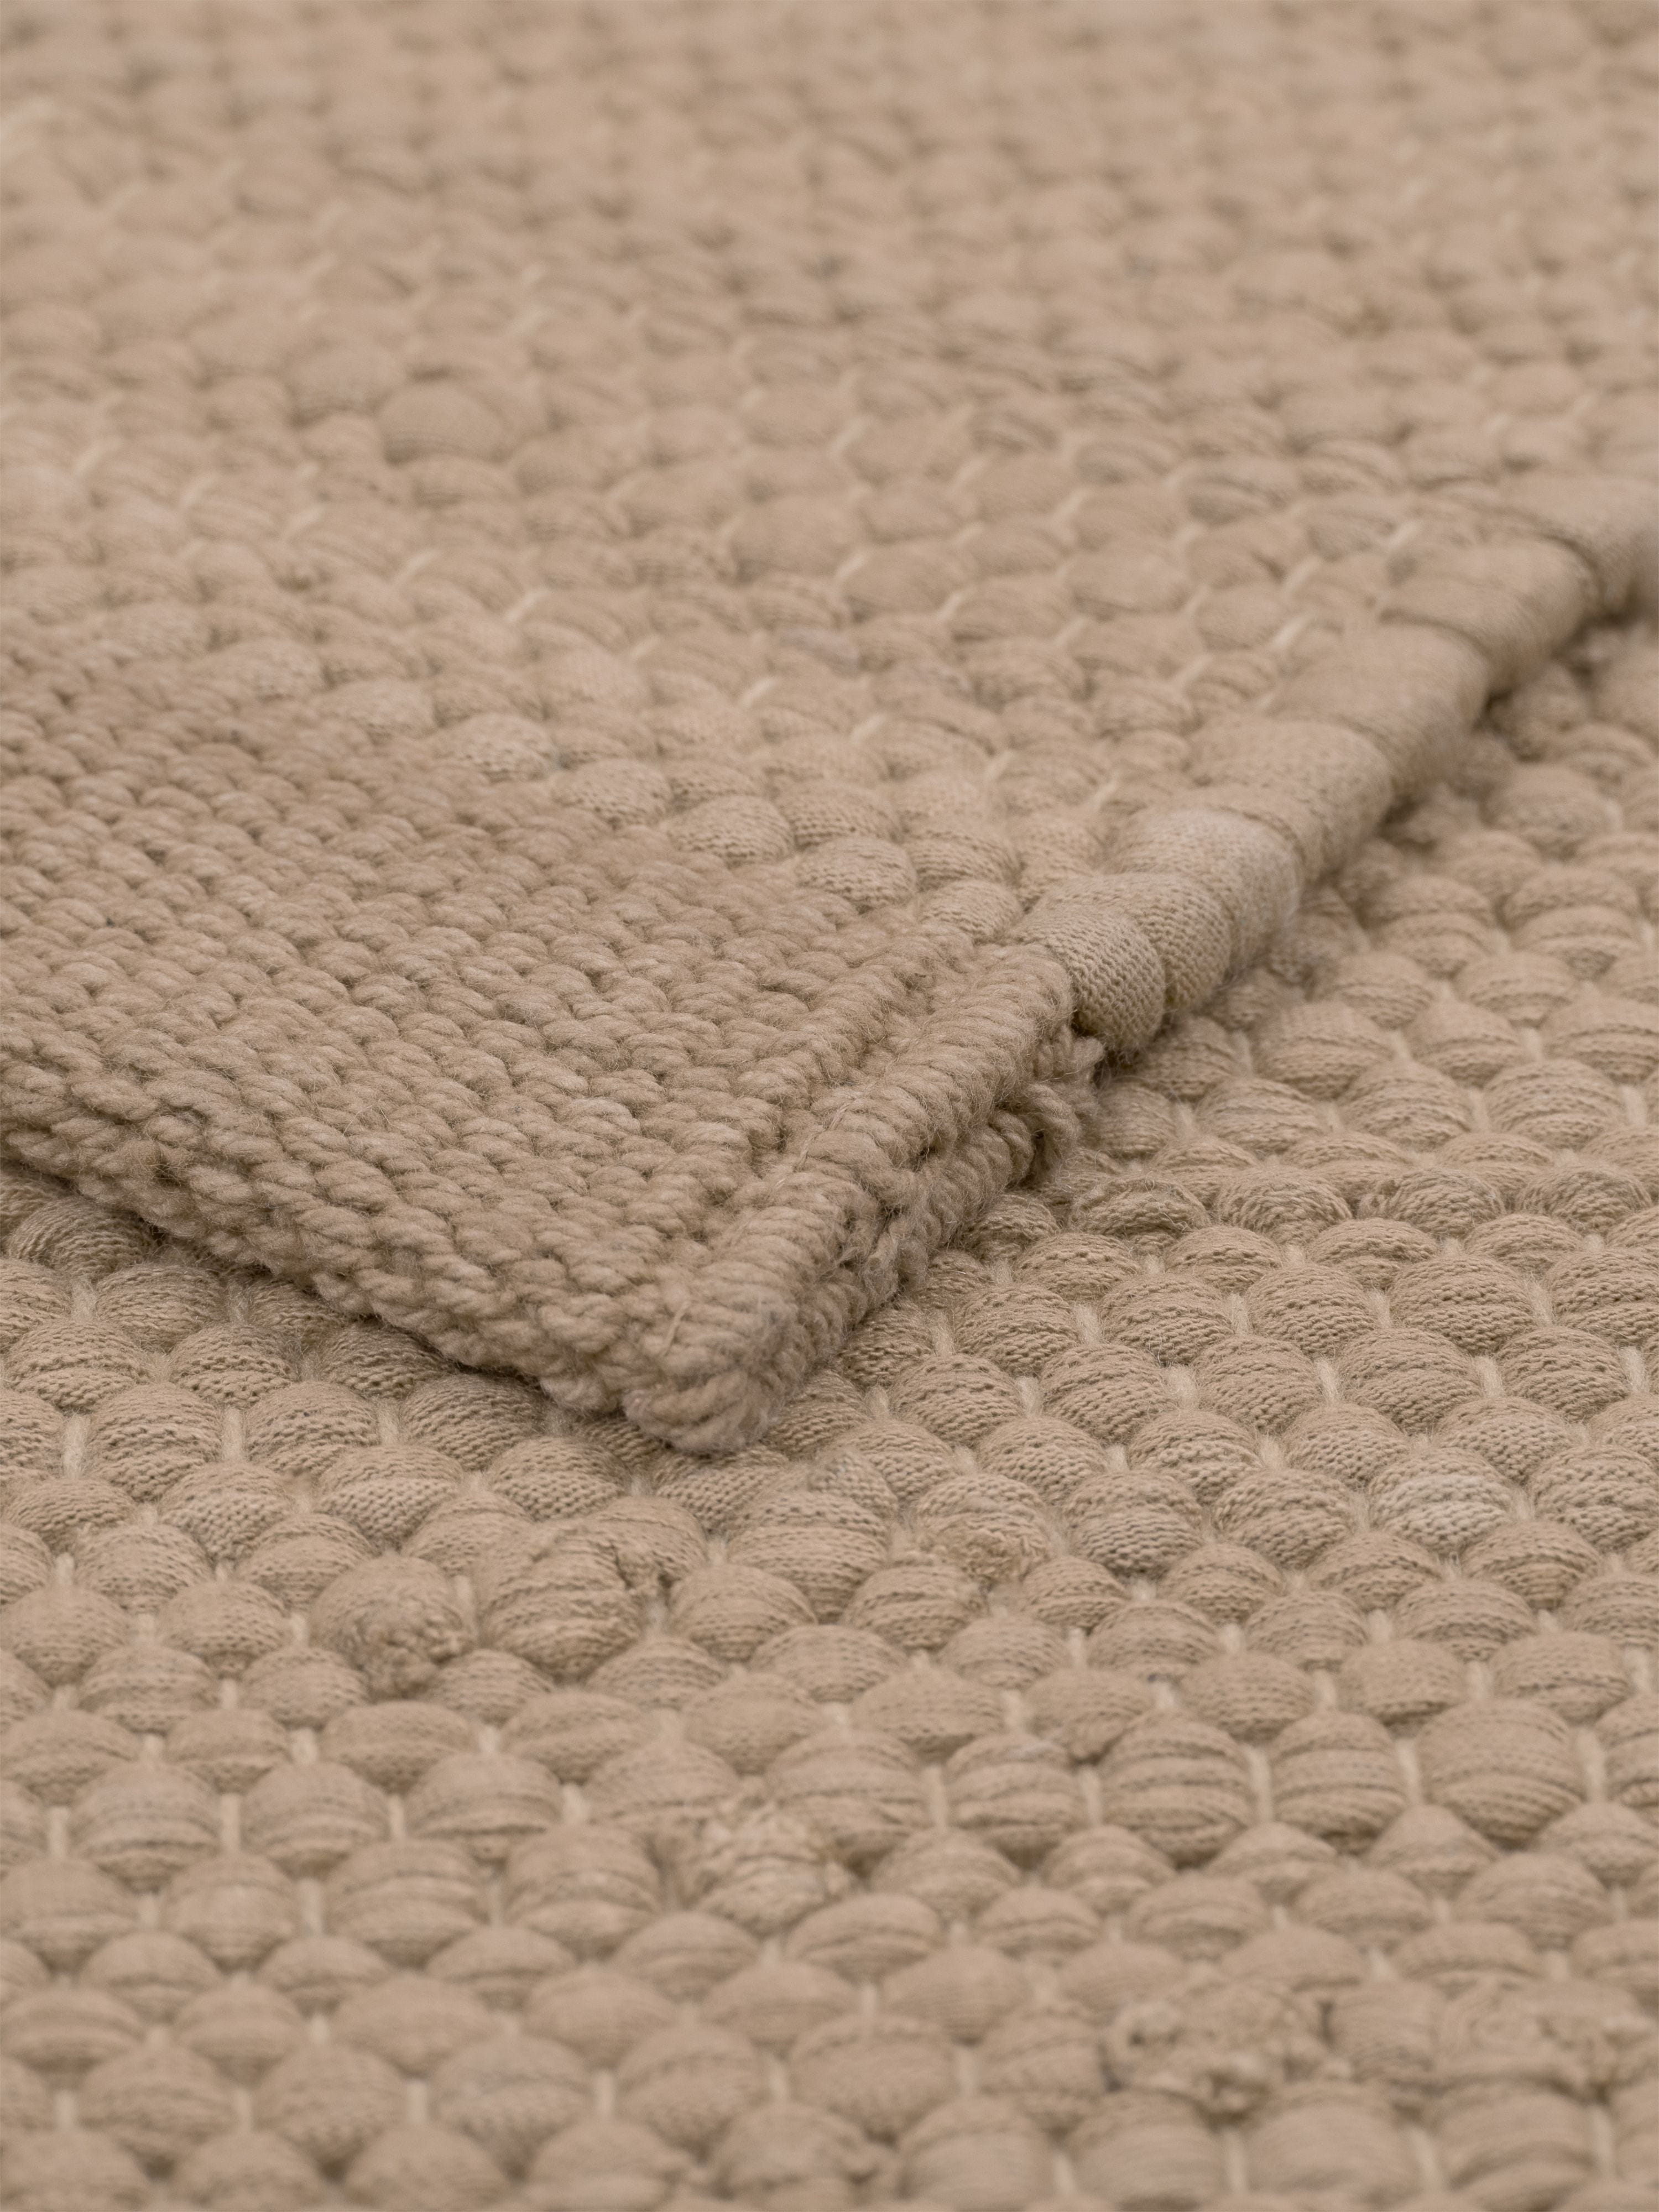 Koberec pevnou bavlněnou koberec 75 x 200 cm, nugat